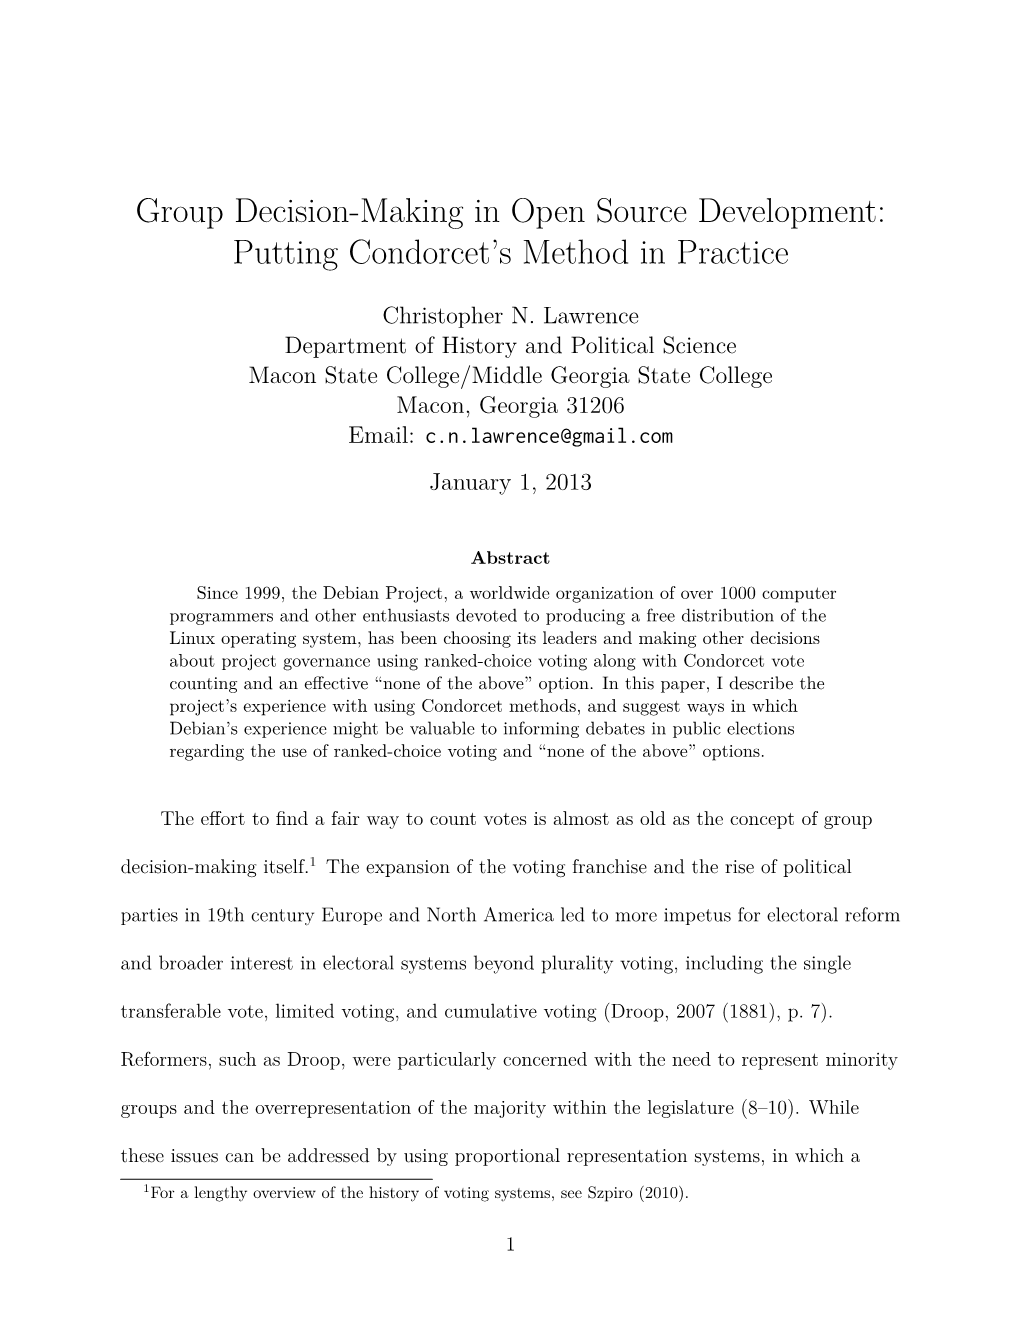 Group Decision-Making in Open Source Development: Putting Condorcet’S Method in Practice